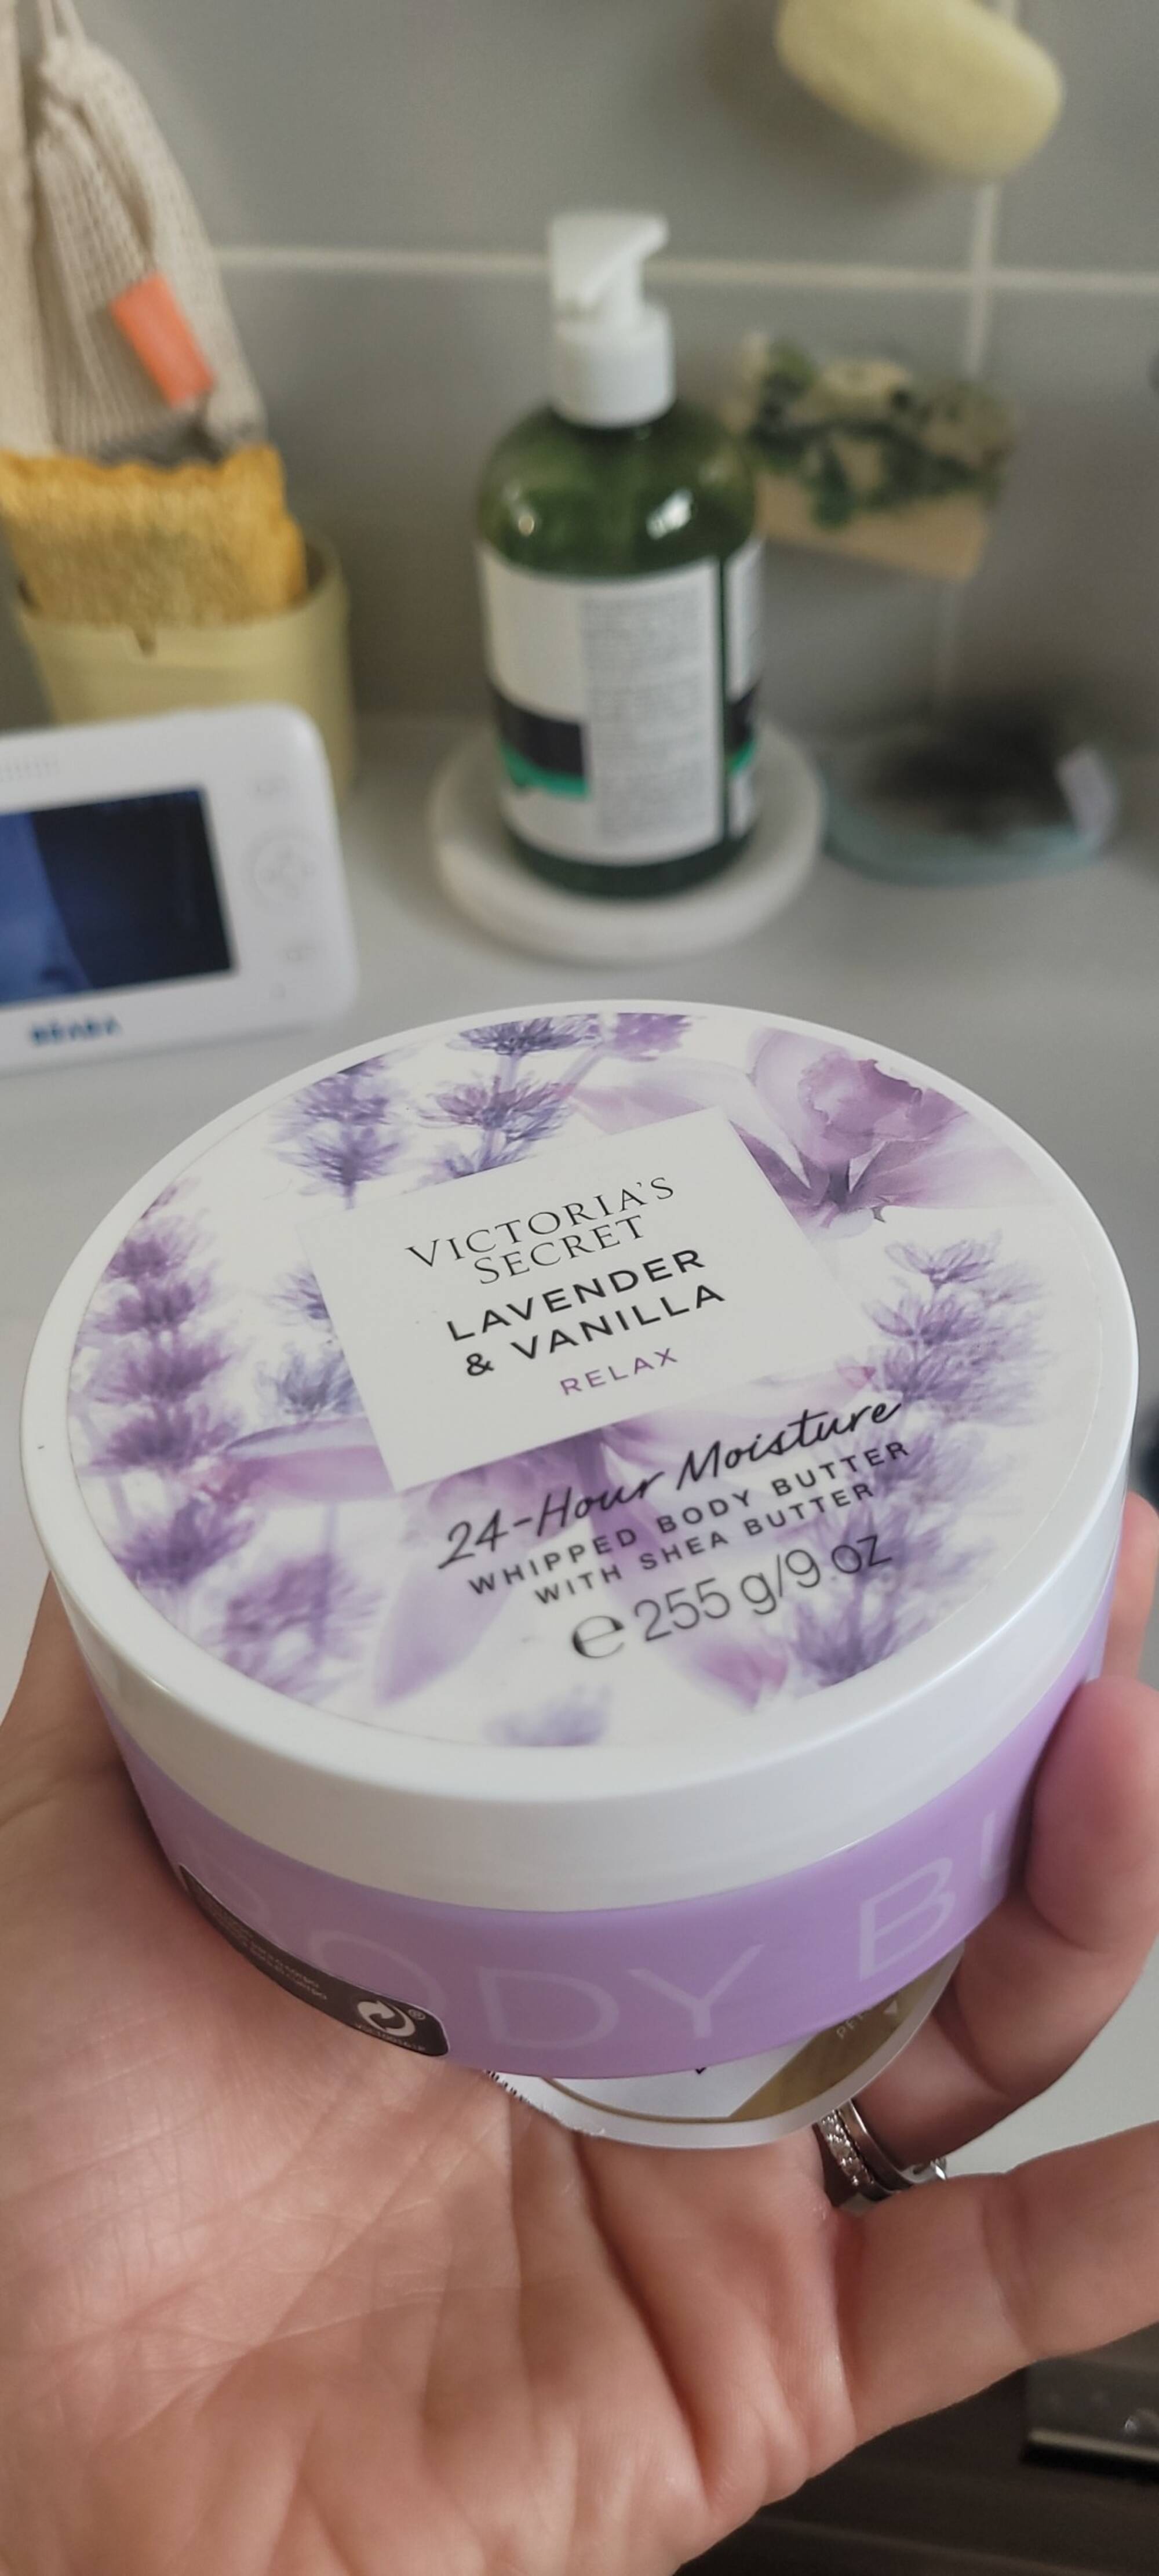 VICTORIA'S SECRET - Lavender & vanilla - 24 hour moisture 